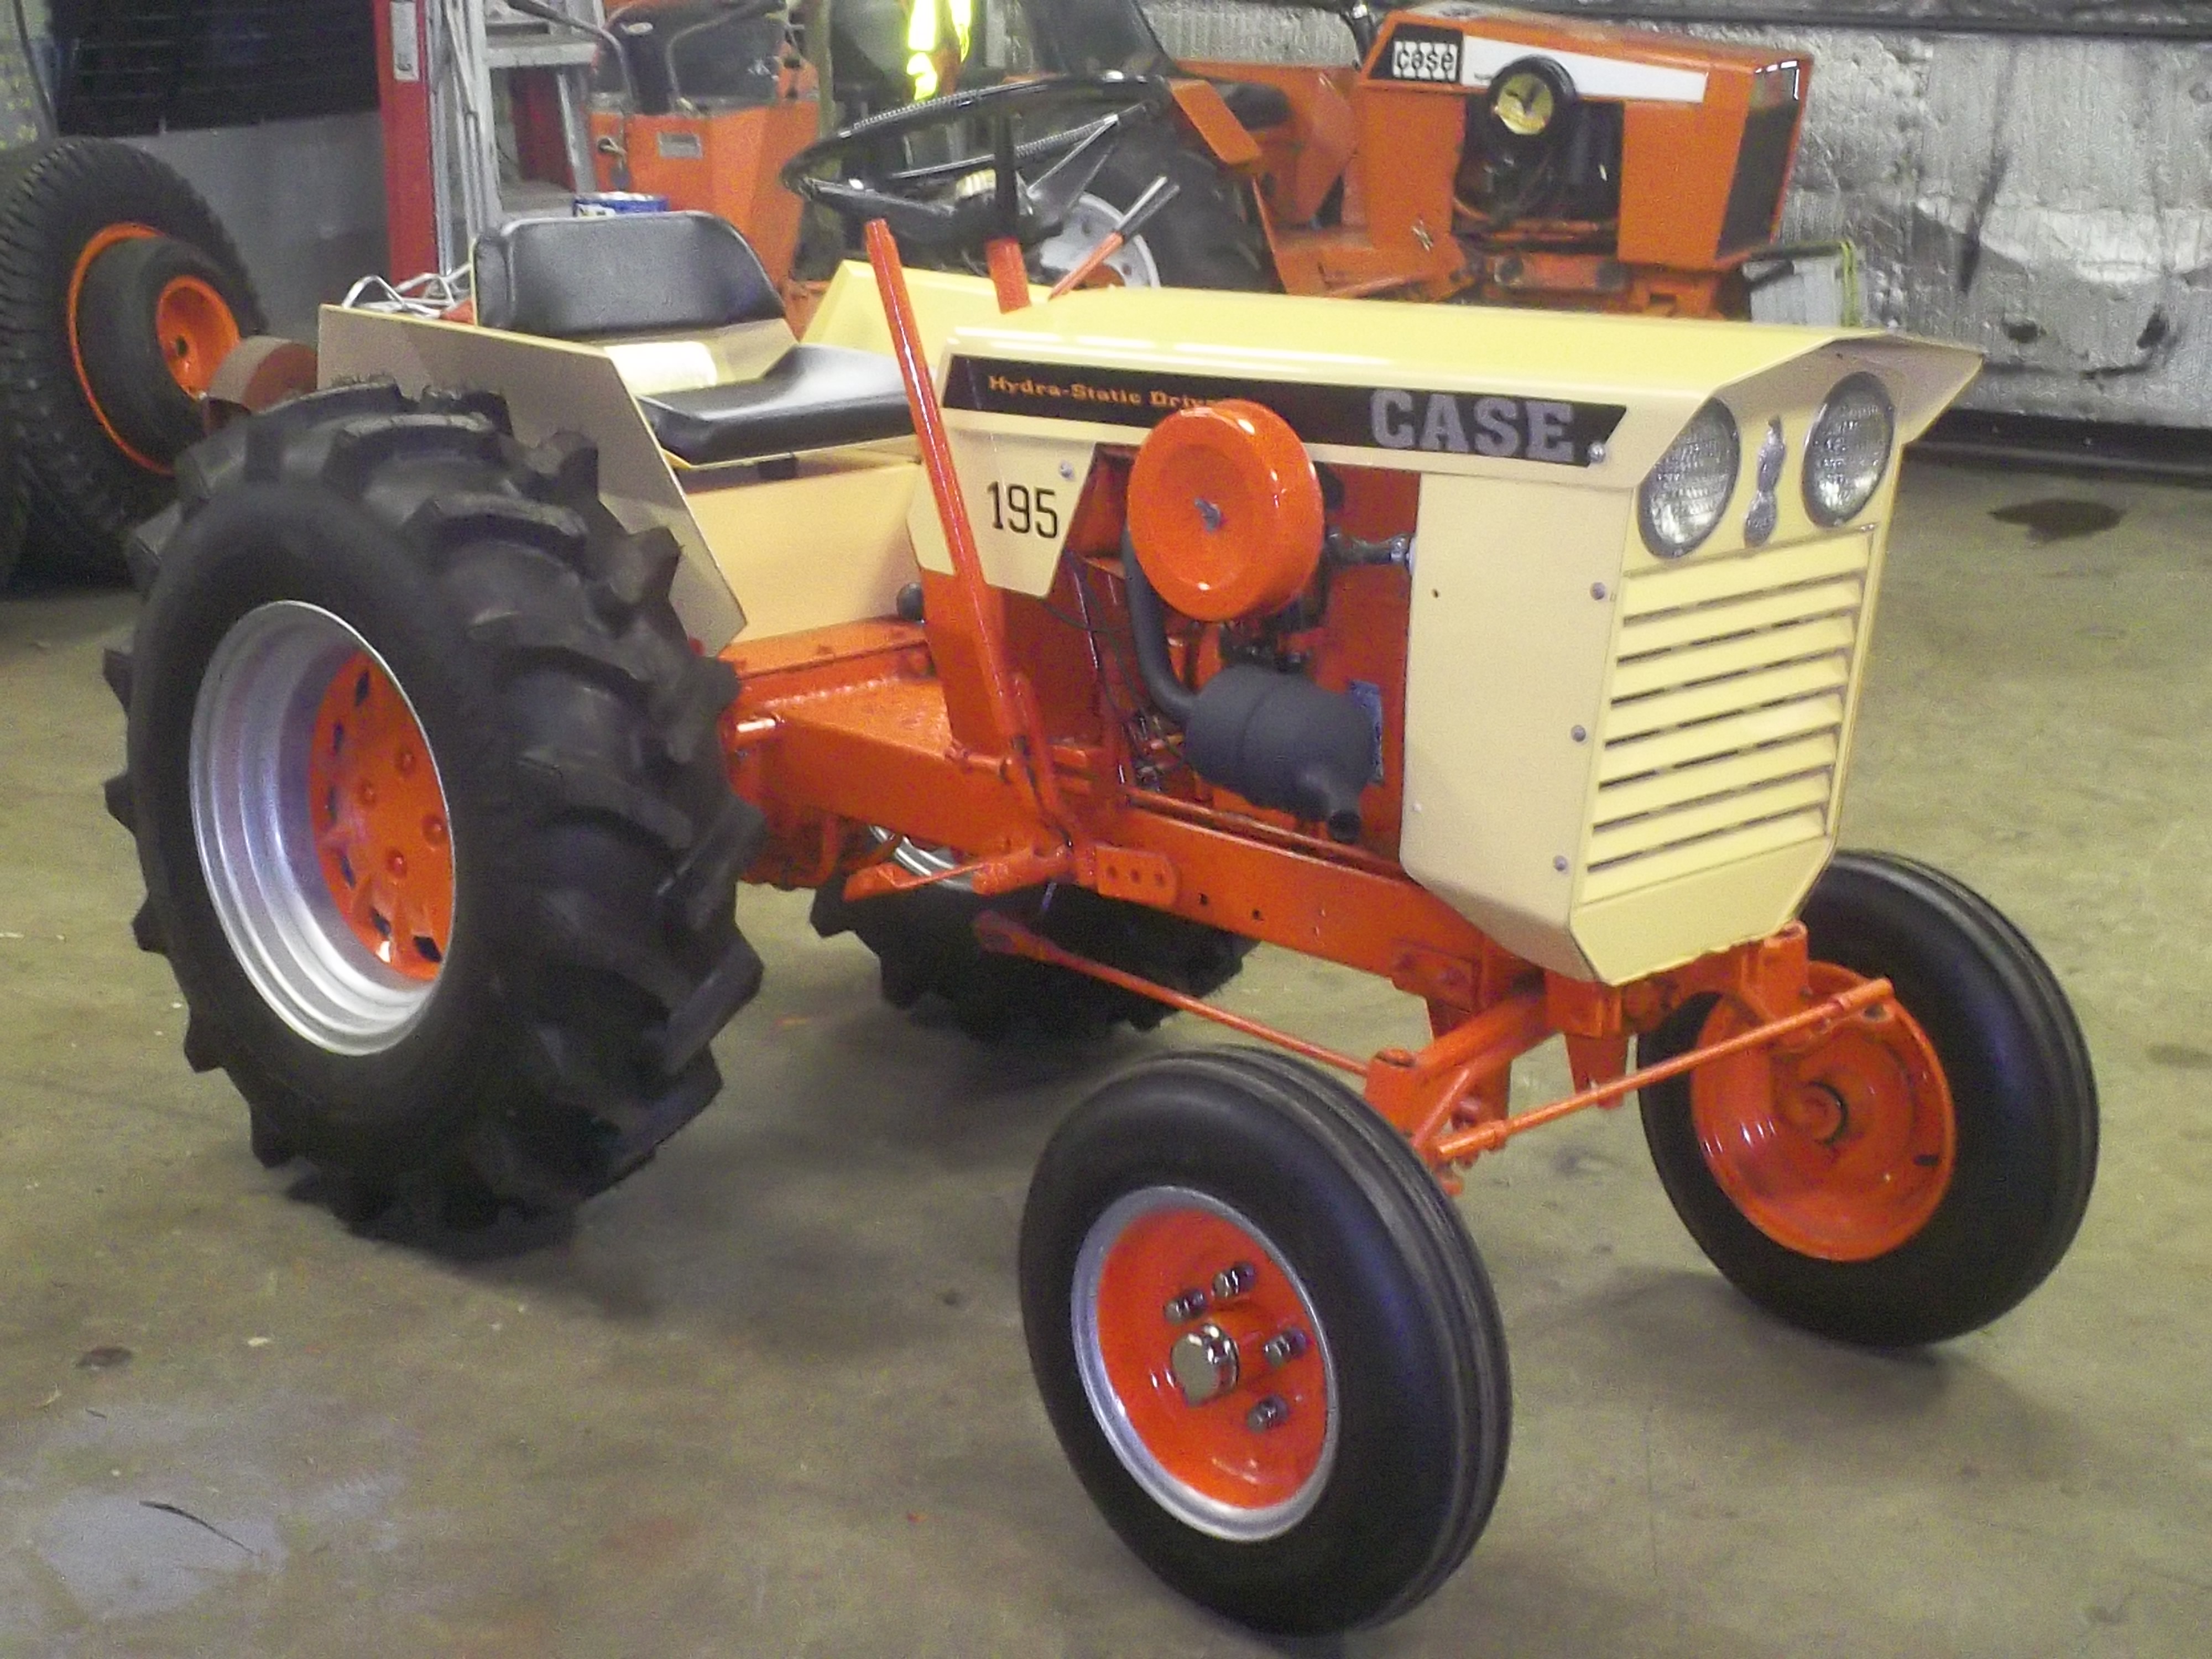 File:Ready for the fair 008 Case garden tractor.JPG - Wikimedia ...